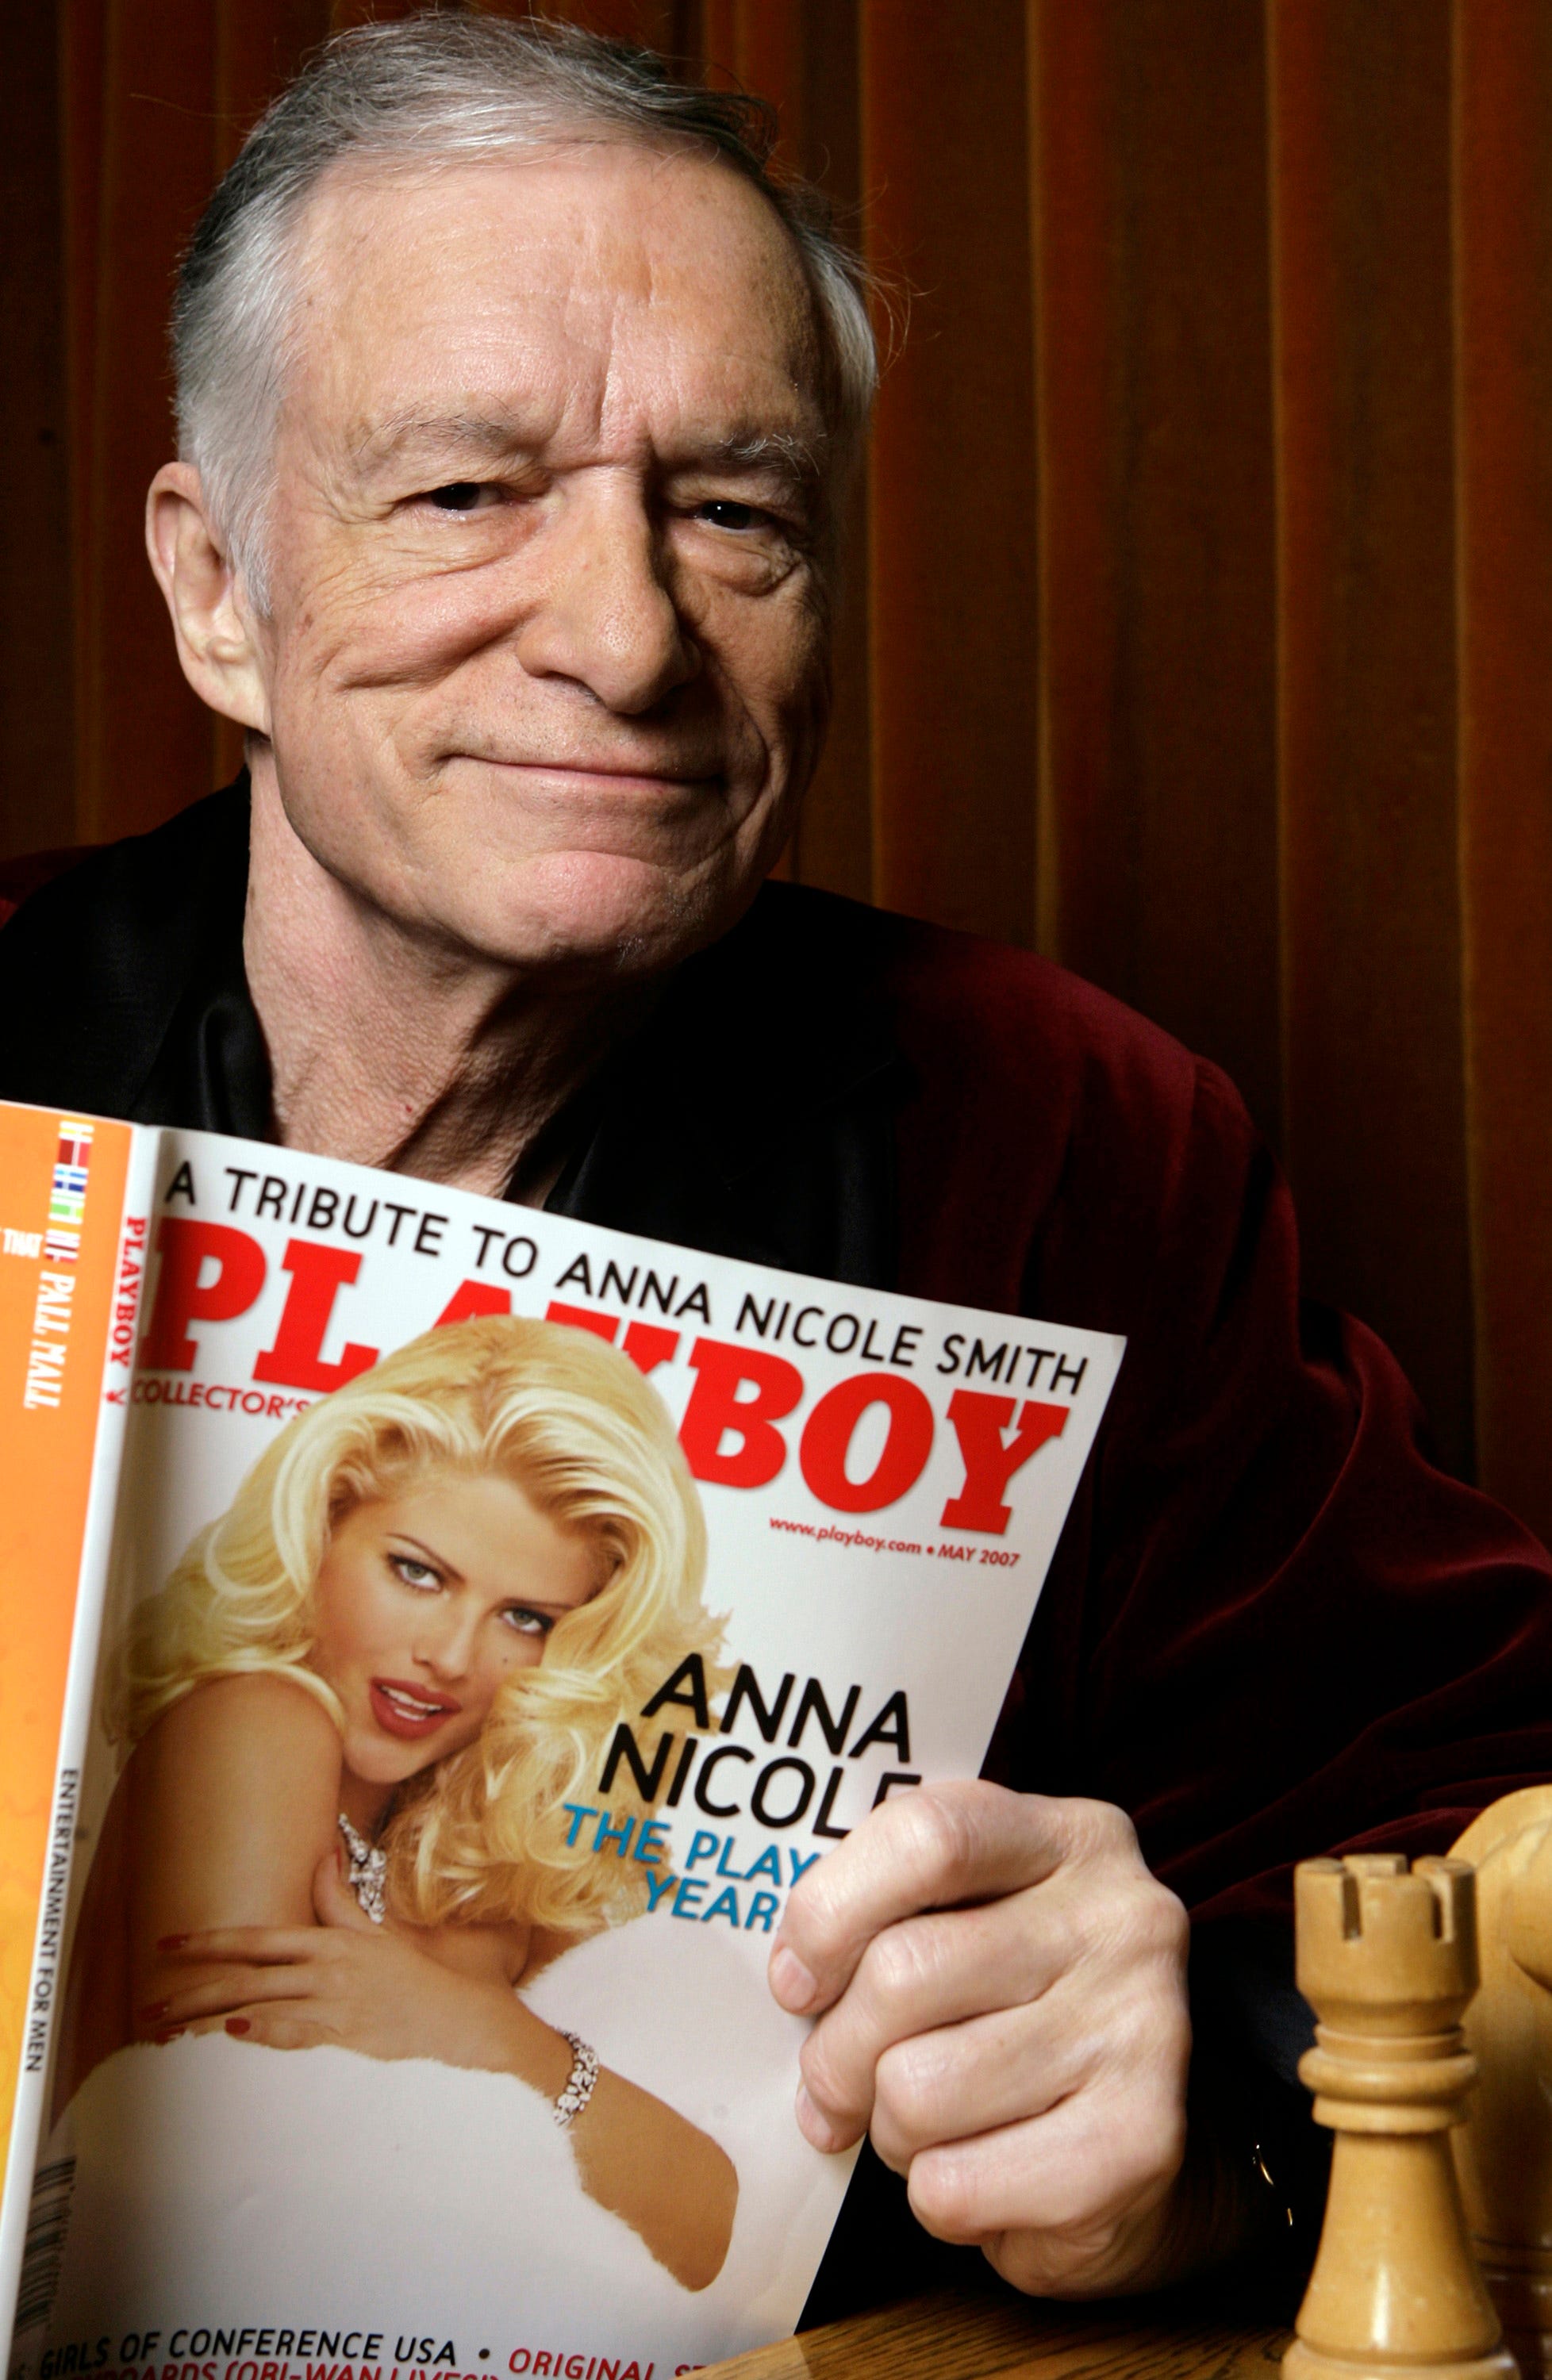 Rape X X X Boys And Girls Down Main Part - Secrets of Playboy': Hugh Hefner docuseries' biggest allegations